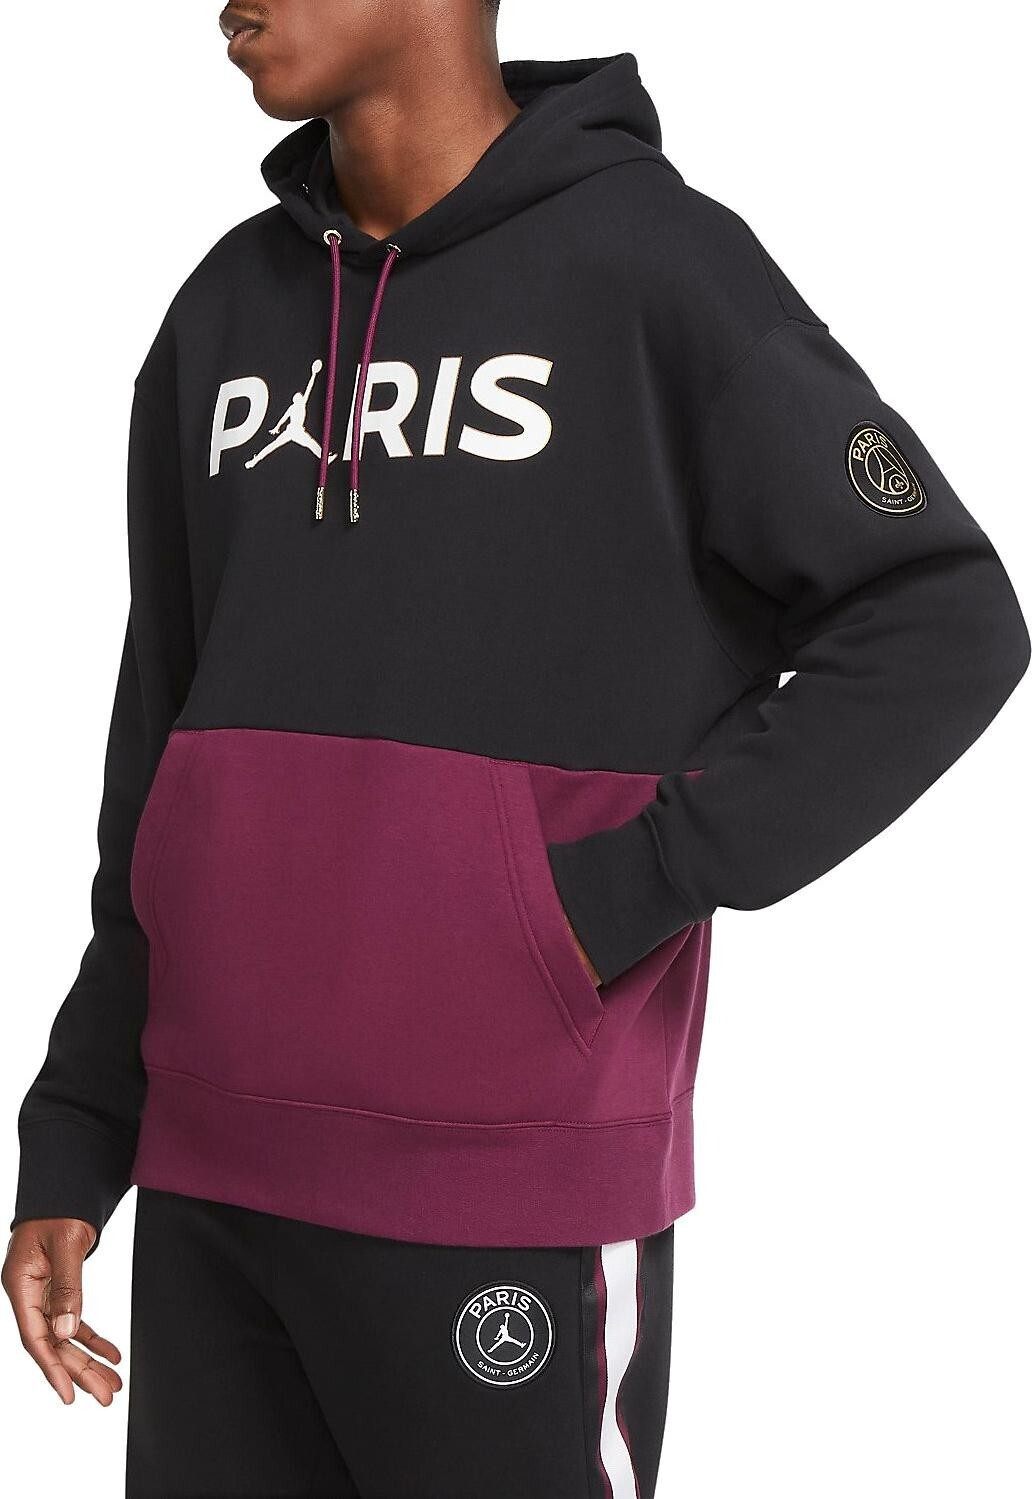 Nike Paris Saint-Germain Fleece Pullover Hoodie black/bordeaux/metallic gold/white